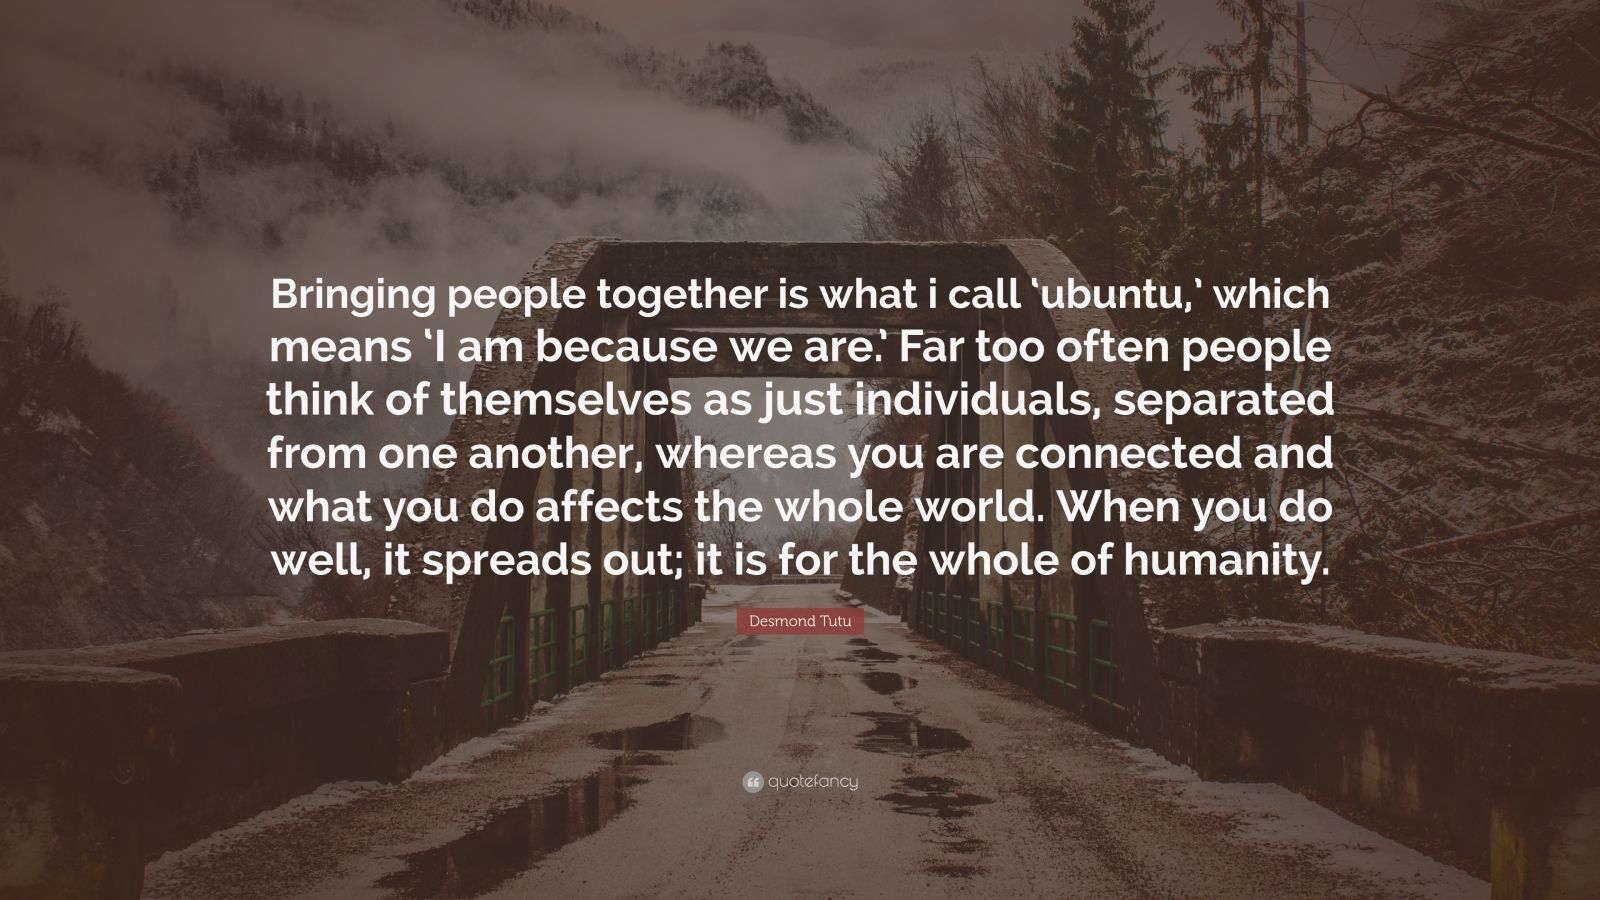 Desmond Tutu Quote: “Bringing people together is what i call ‘ubuntu